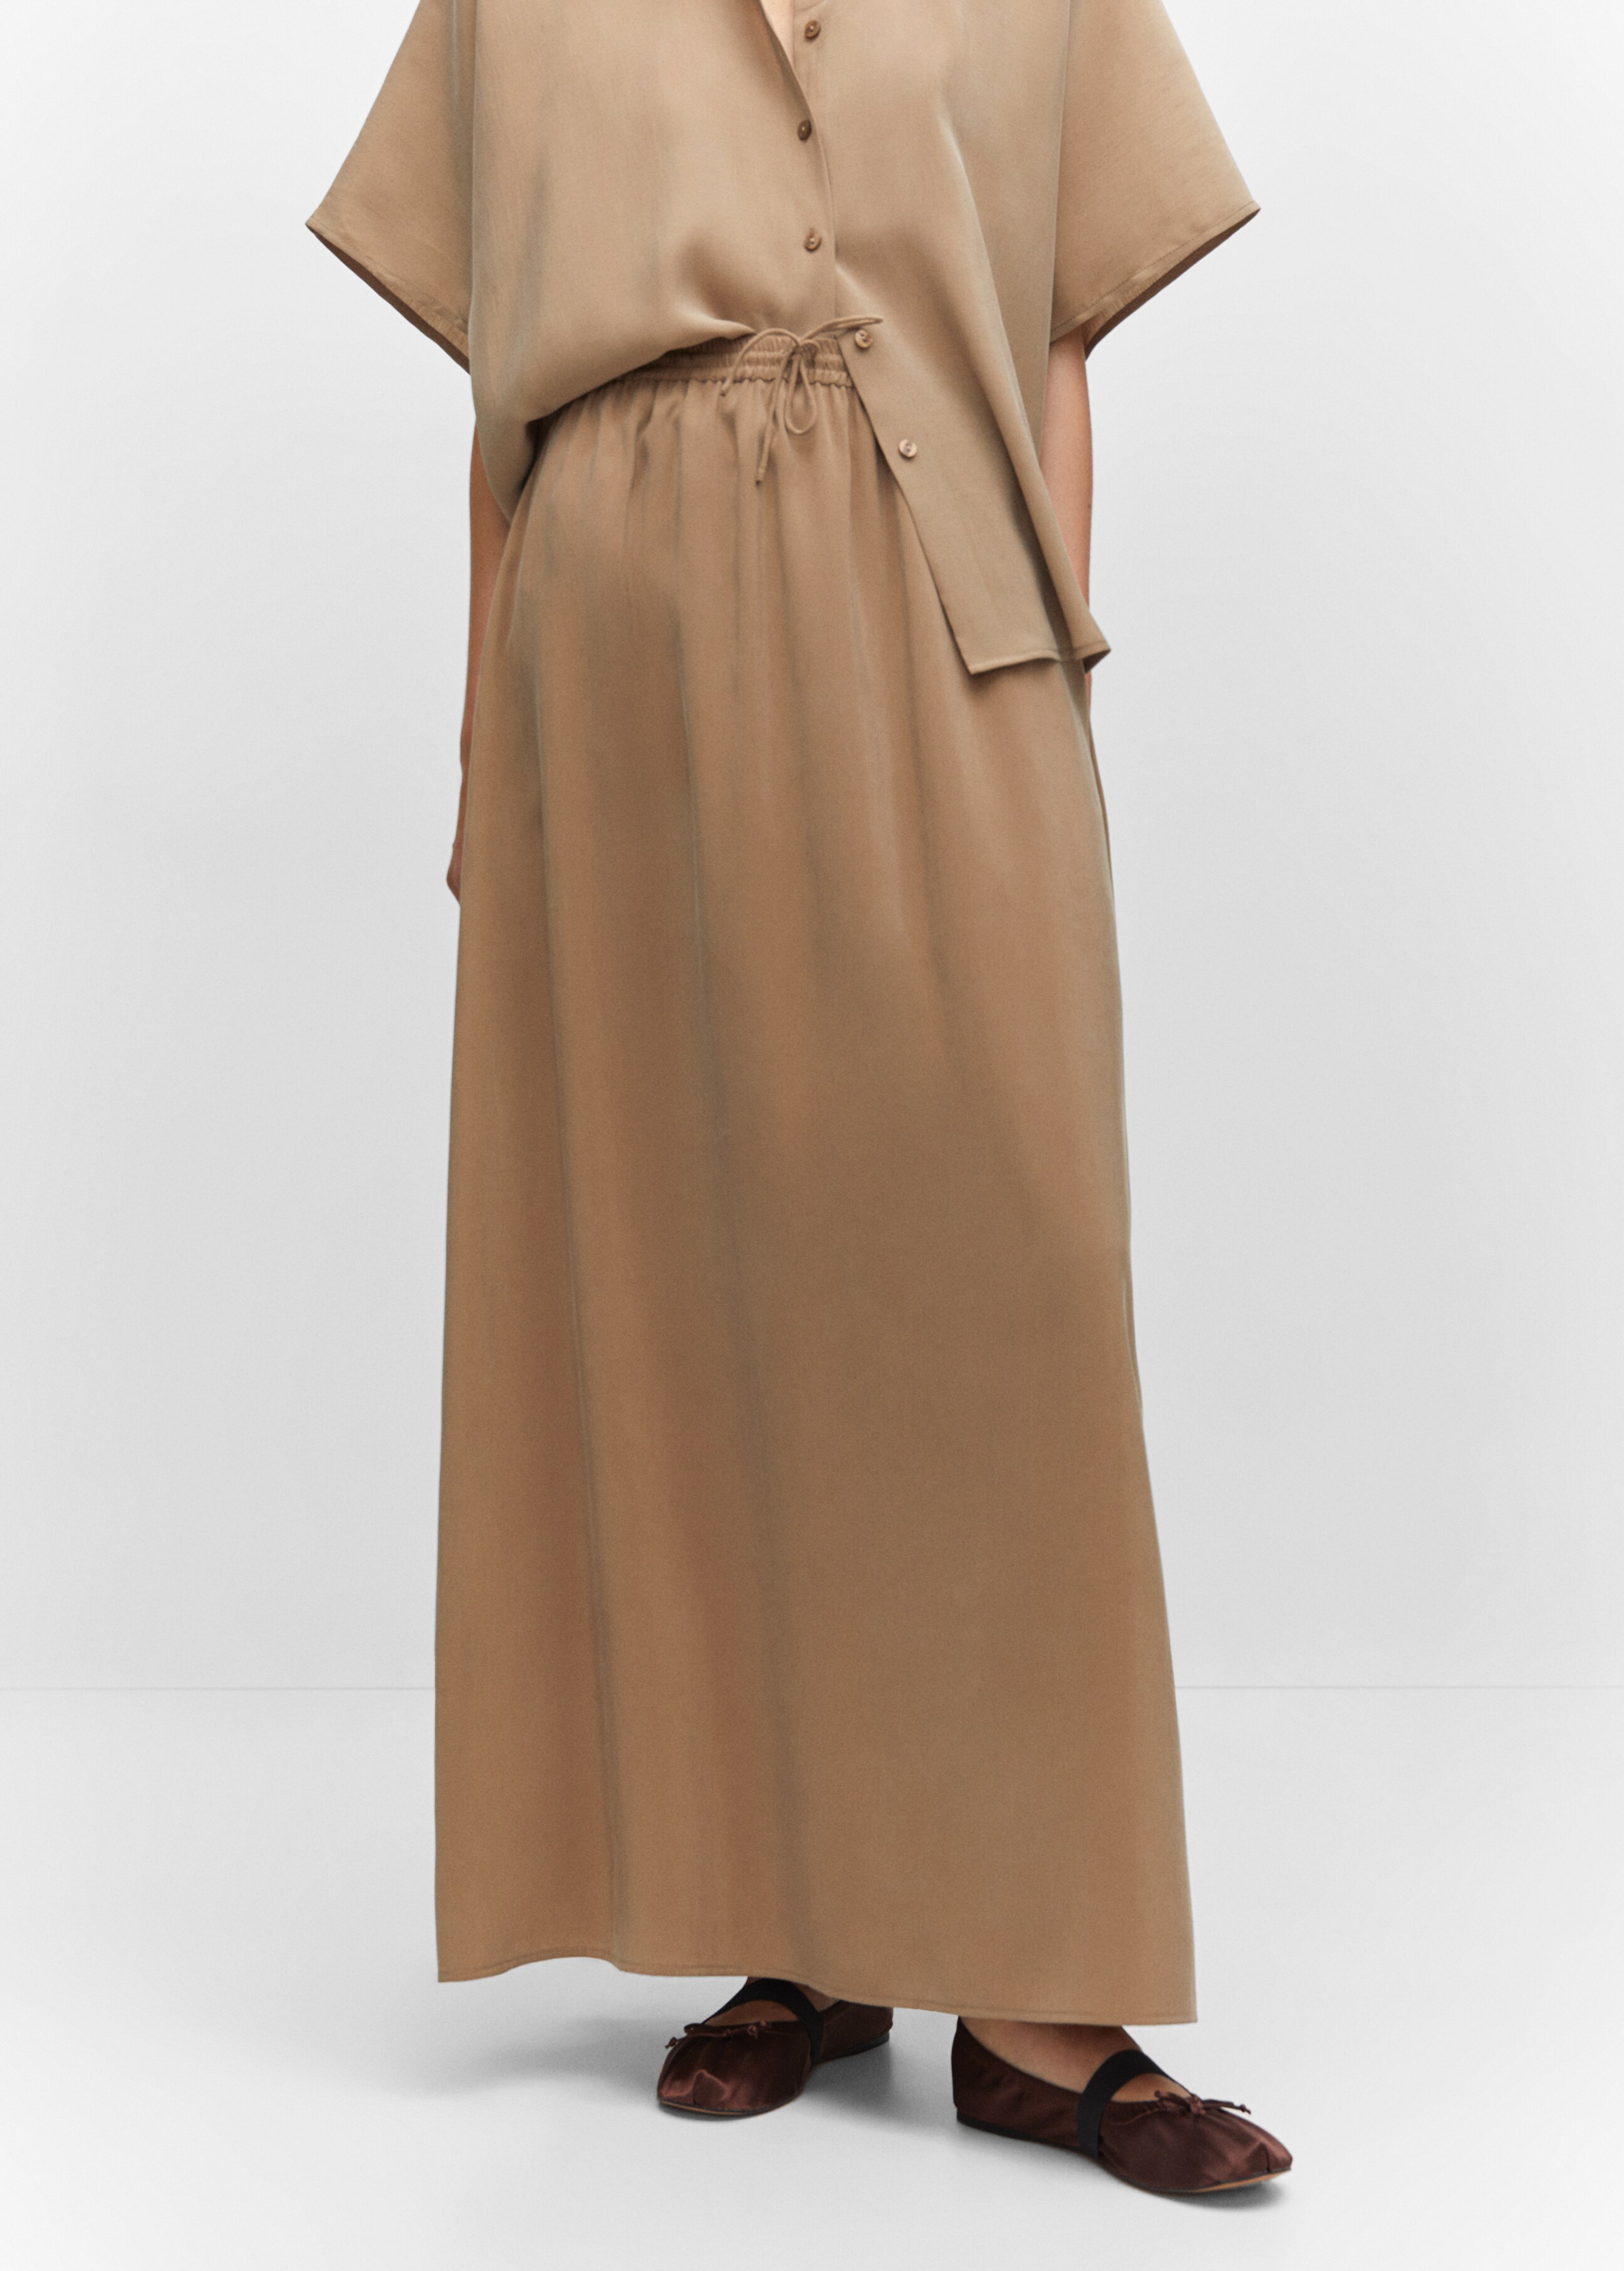 Modal skirt with elastic waist - Medium plane